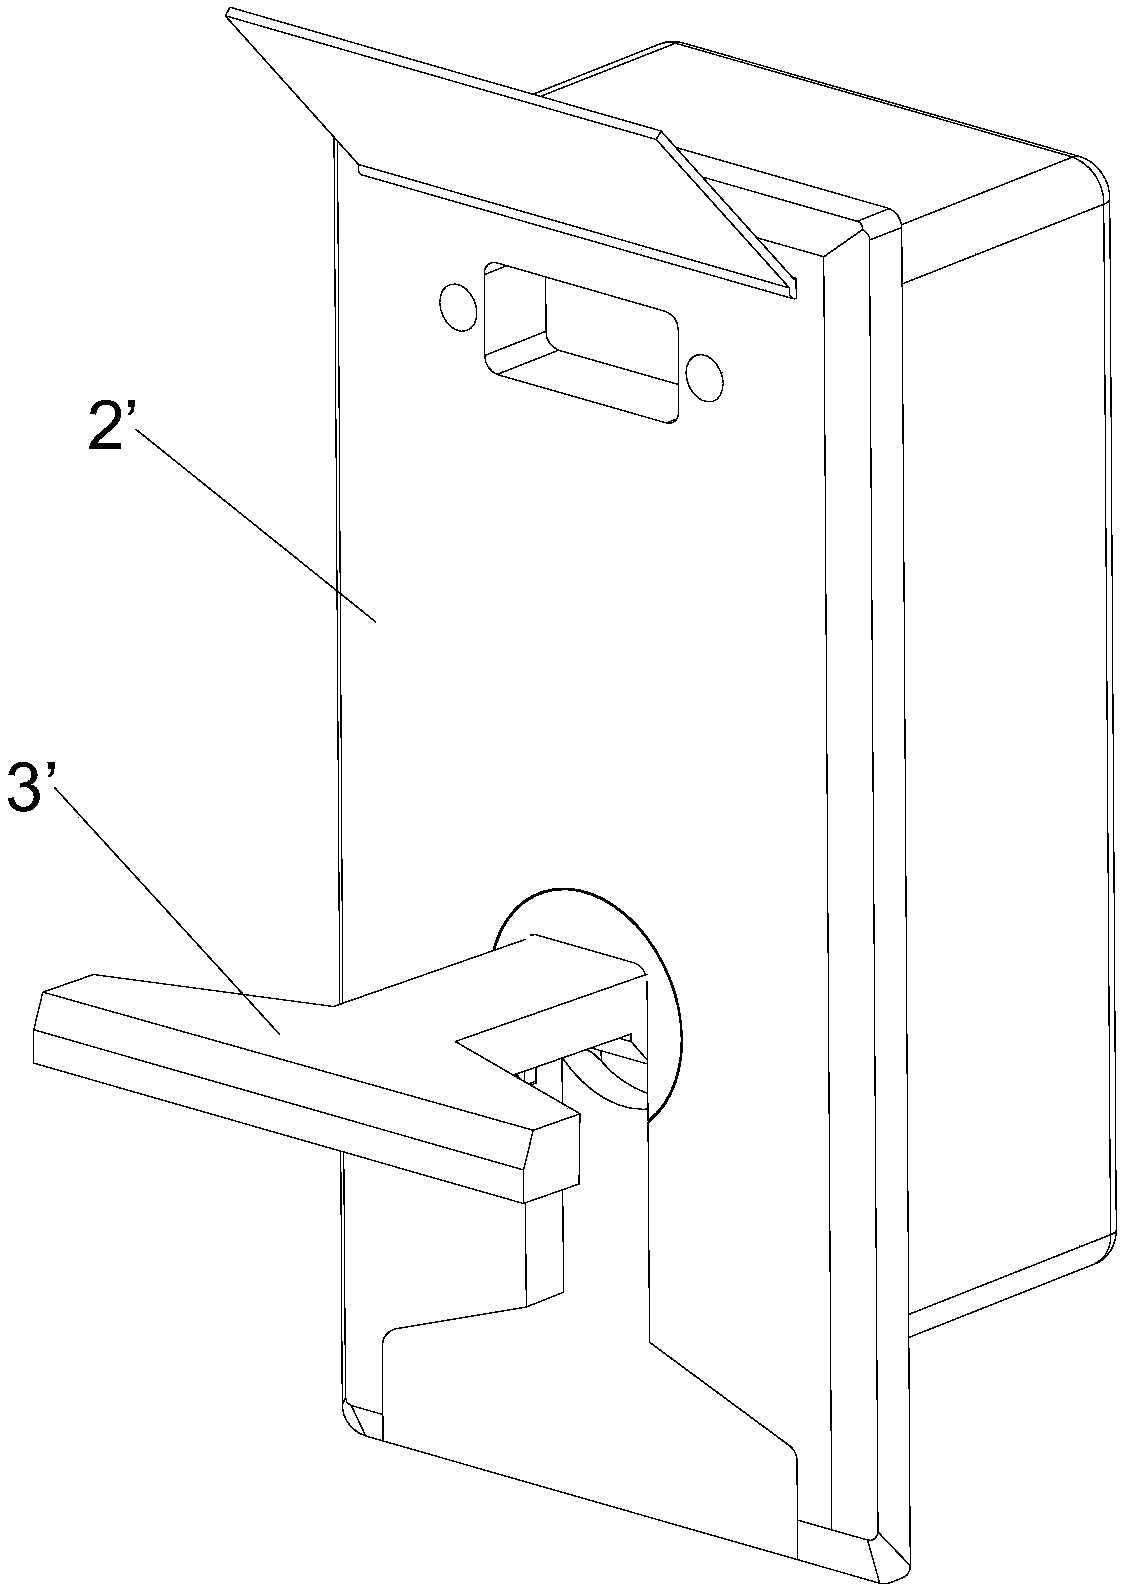 Panel lock